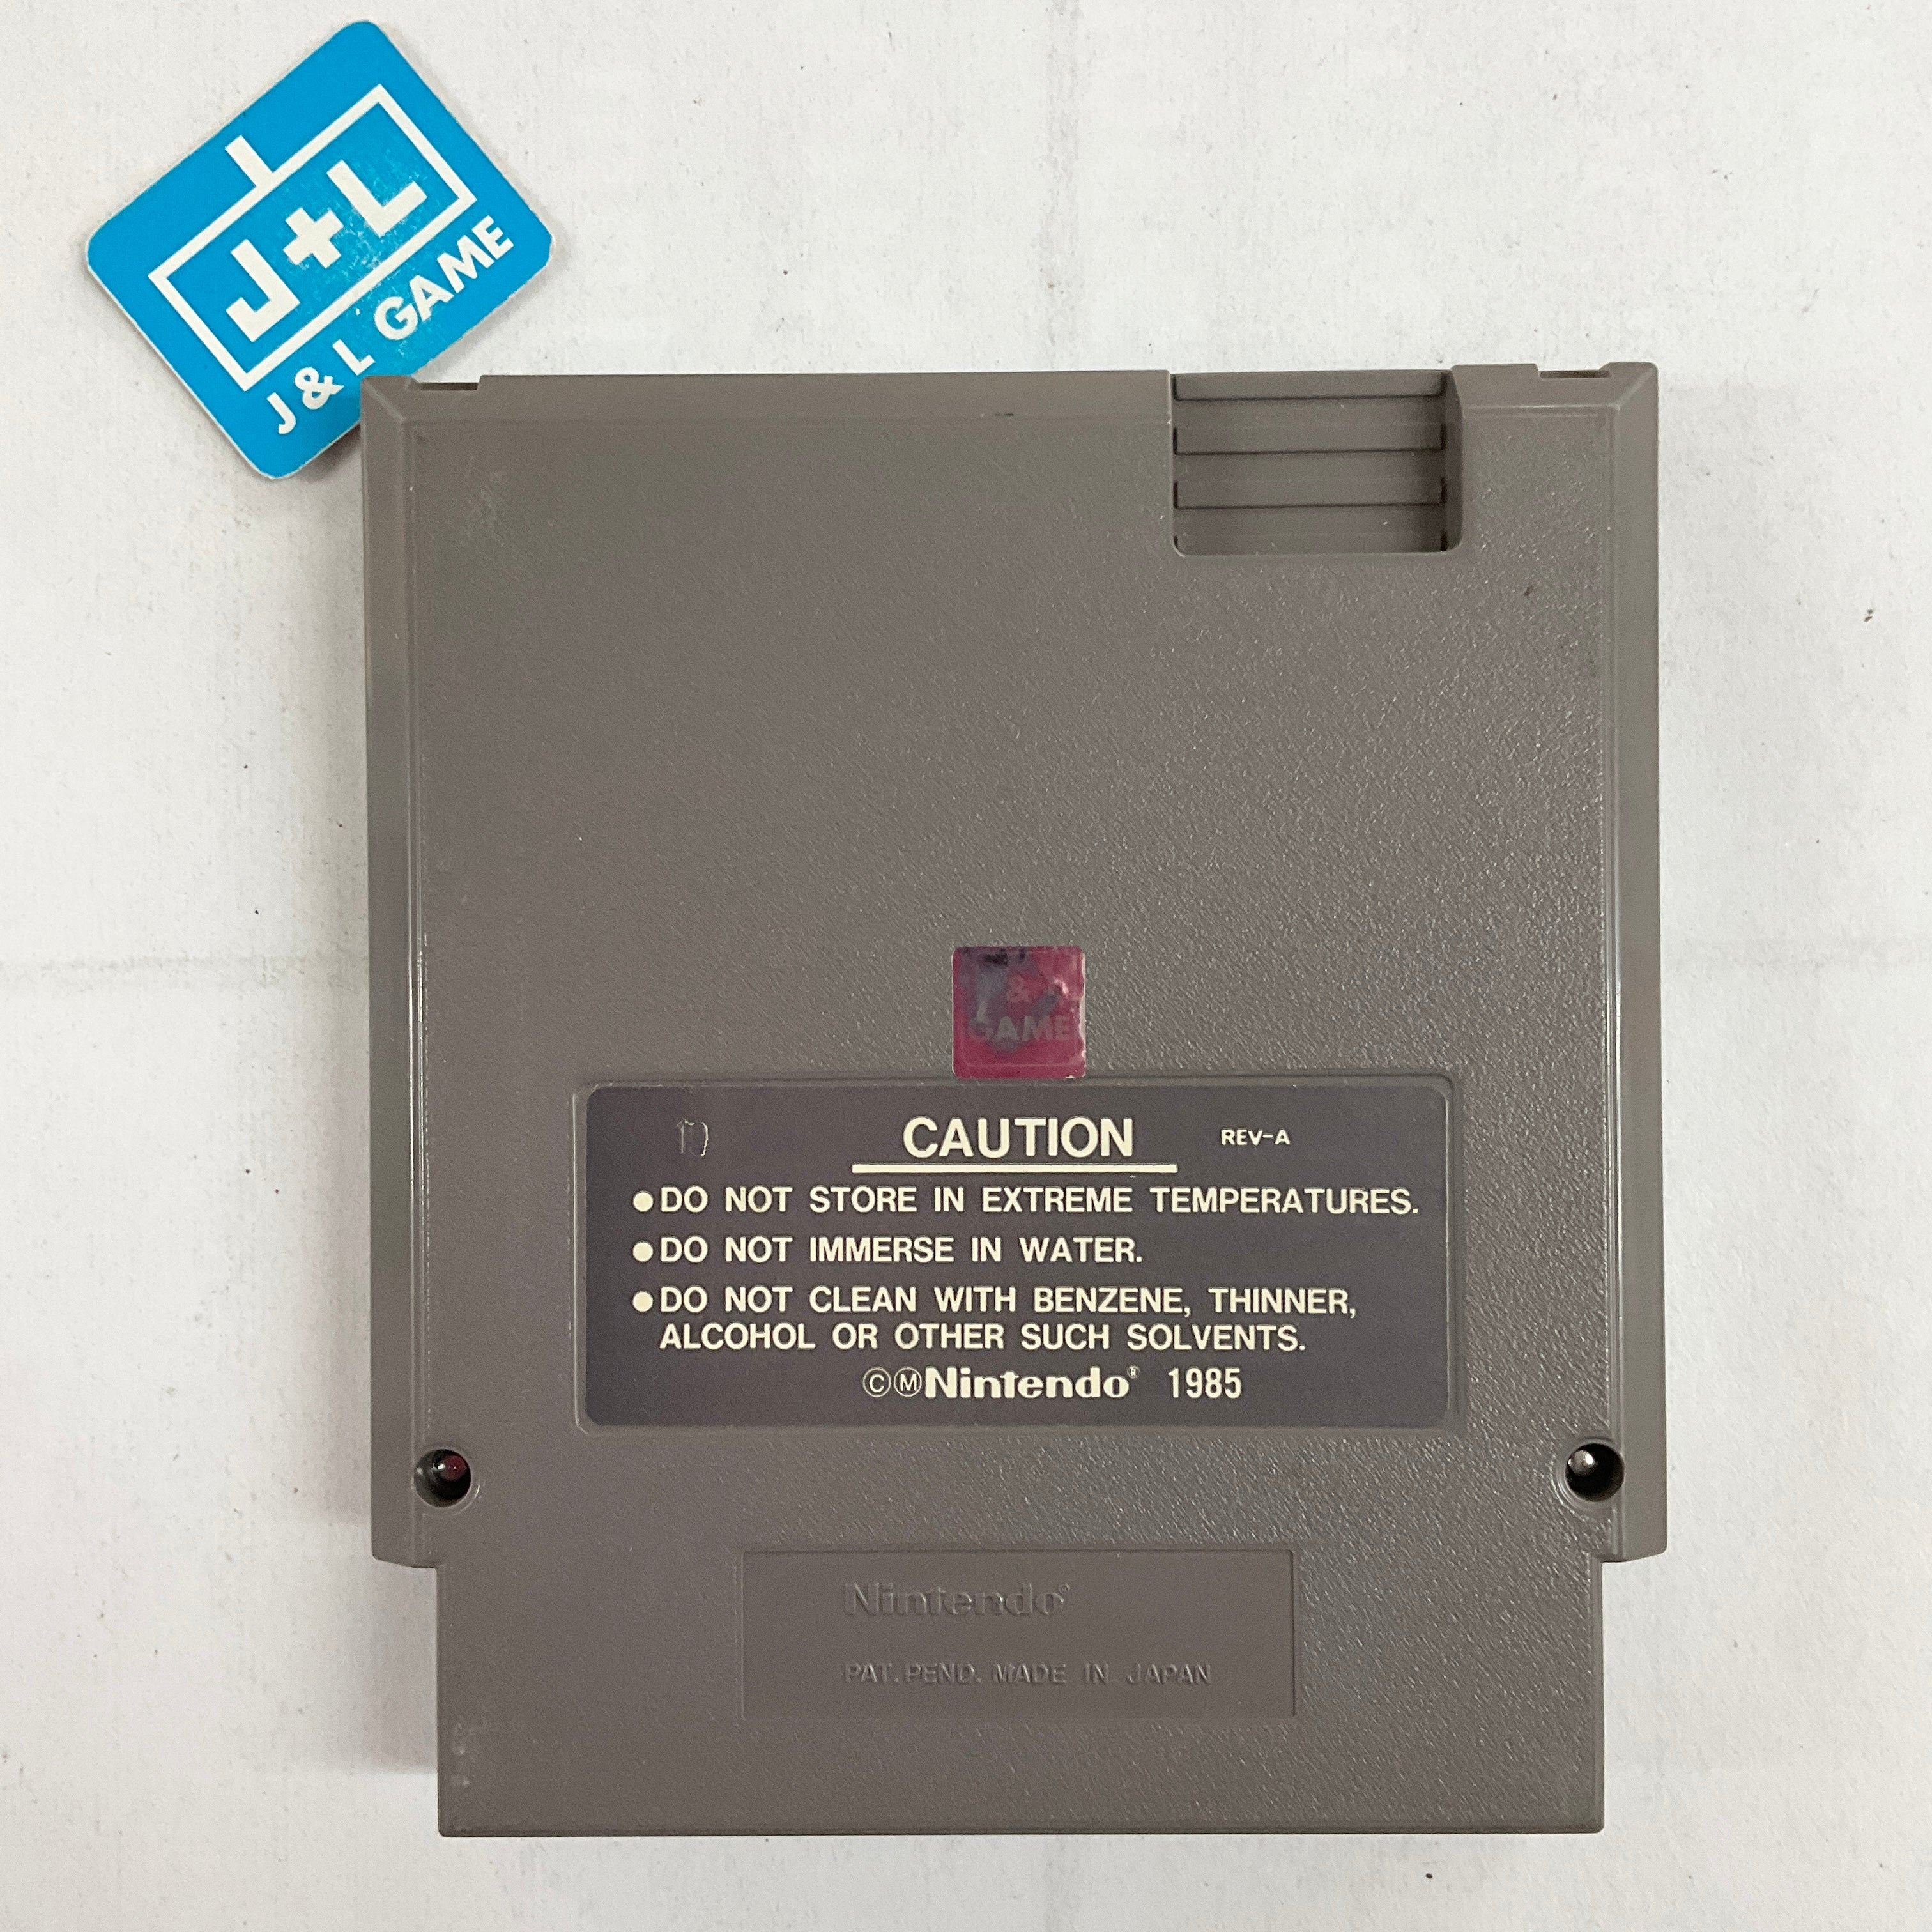 Fester's Quest - (NES) Nintendo Entertainment System [Pre-Owned] Video Games SunSoft   